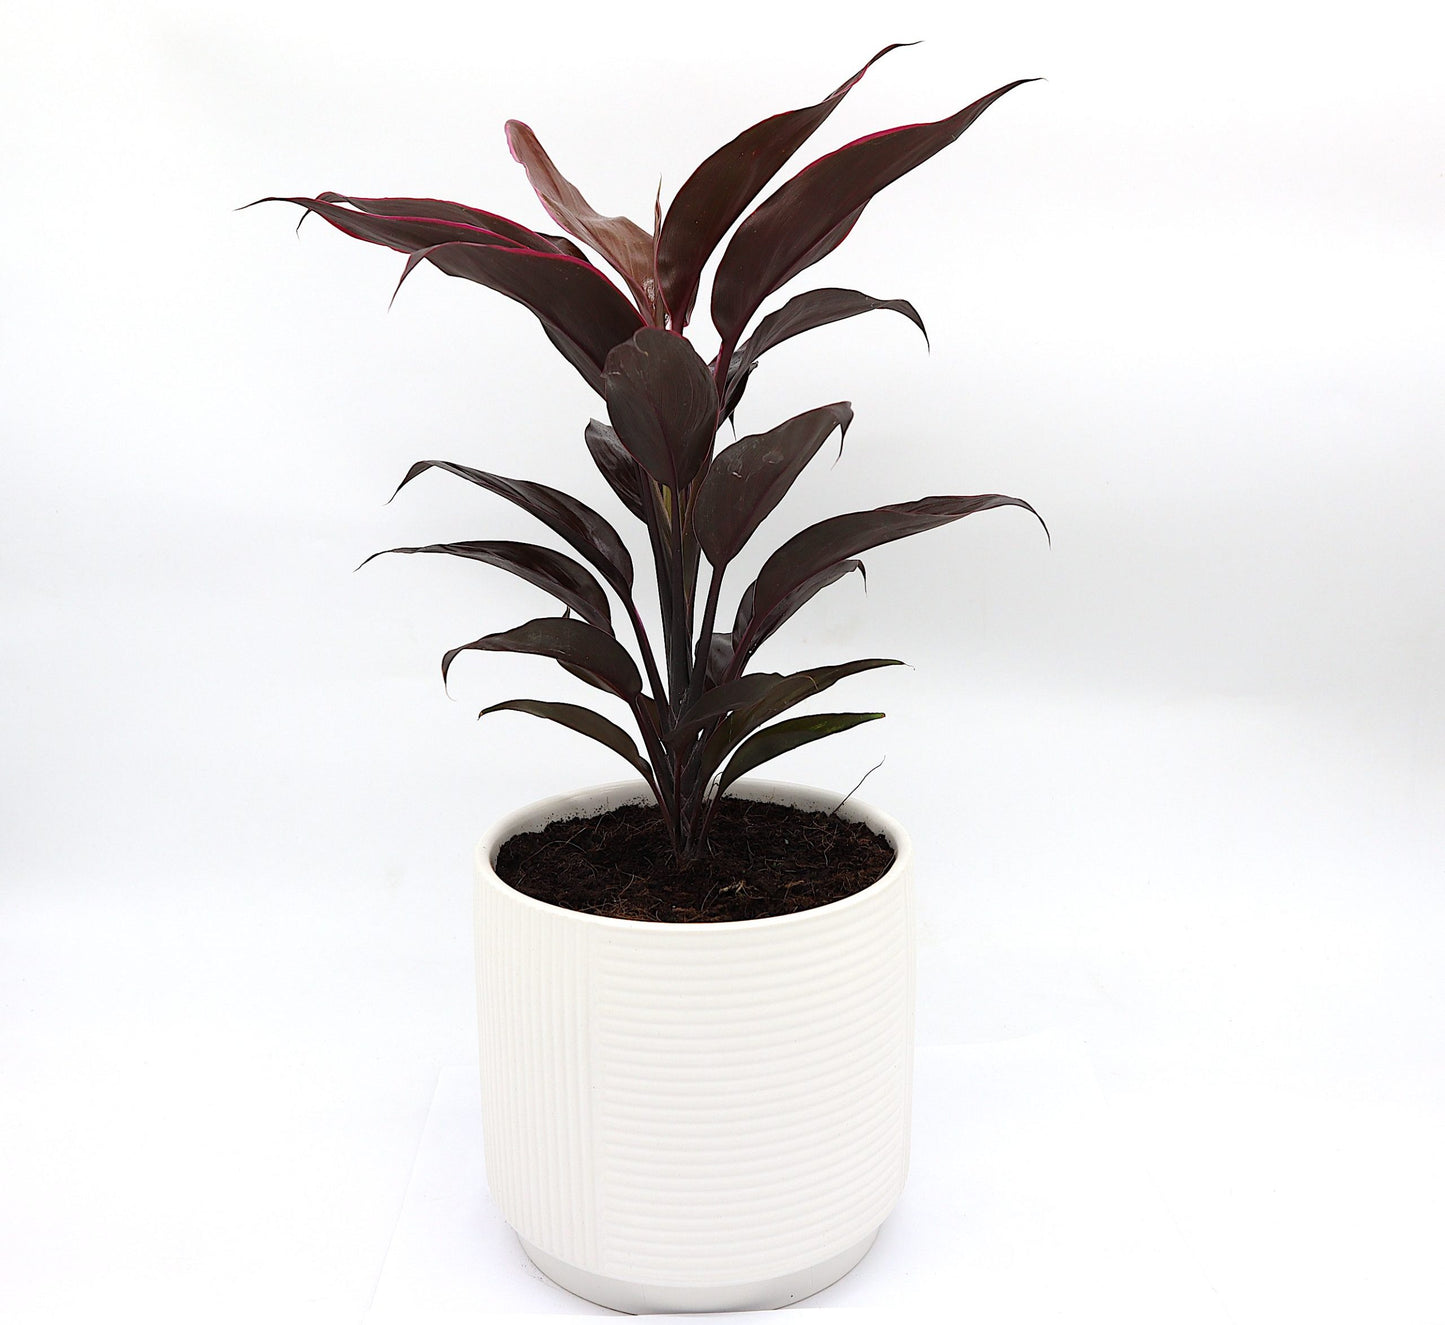 Cordyline Fruticosa Mambo "Good luck plant" 25-30cm